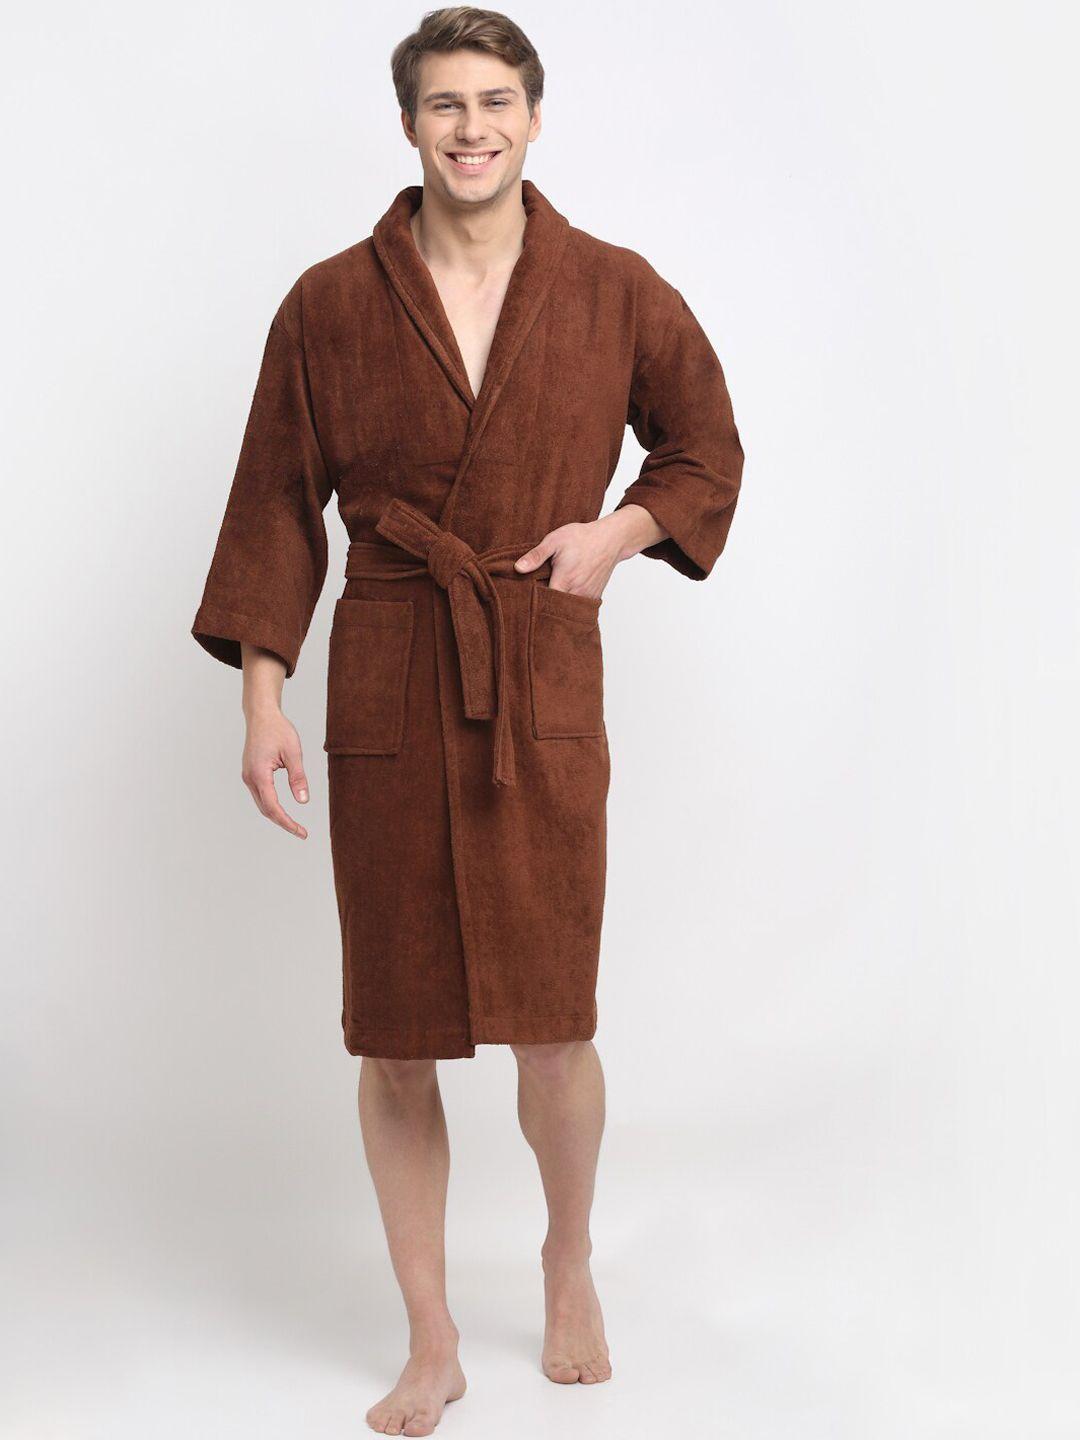 creeva unisex brown solid bath robe with pockets